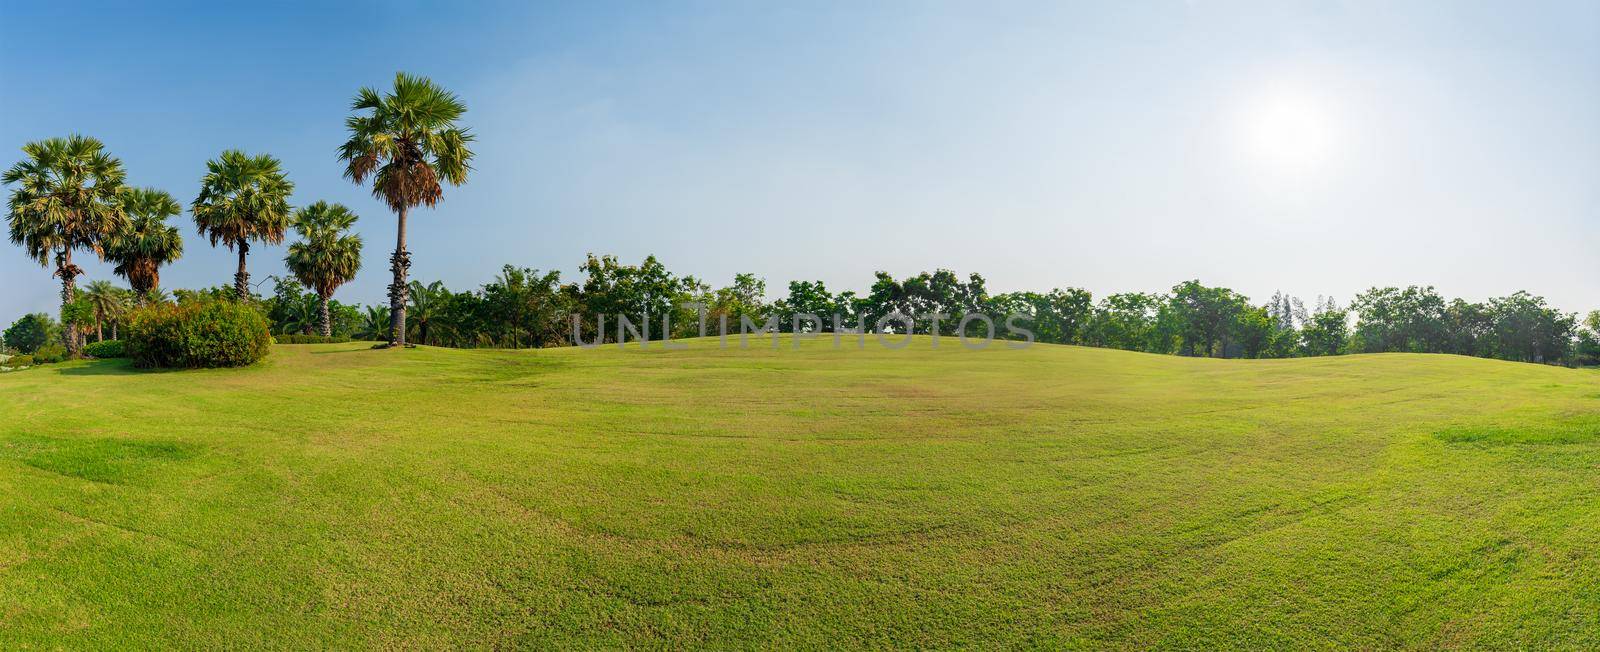 Panorama green grass on  golf field  by stoonn